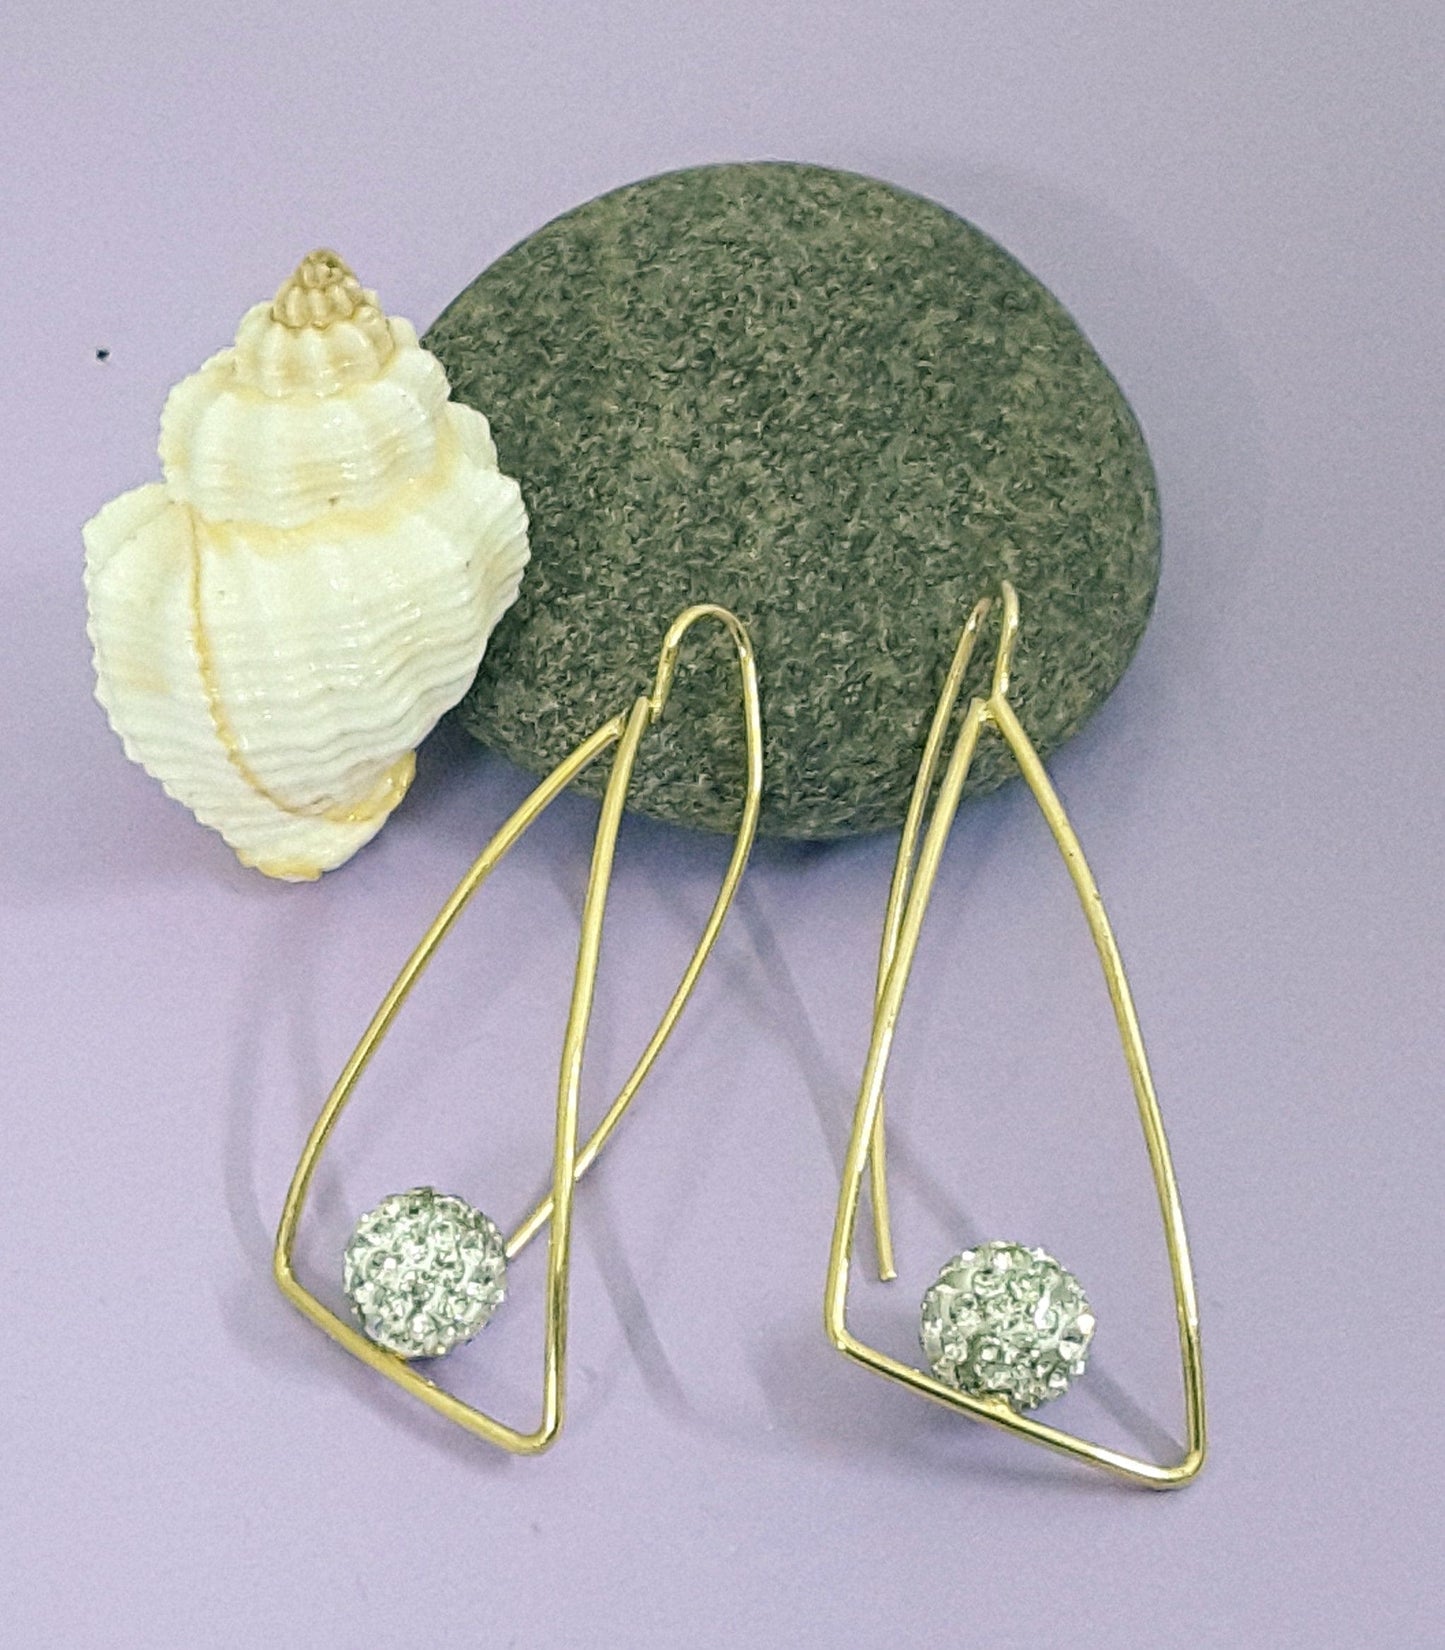 Moonstruck Gold/Golden Dangle Geometric Diamond Studded Earrings for Women - www.MoonstruckINC.com